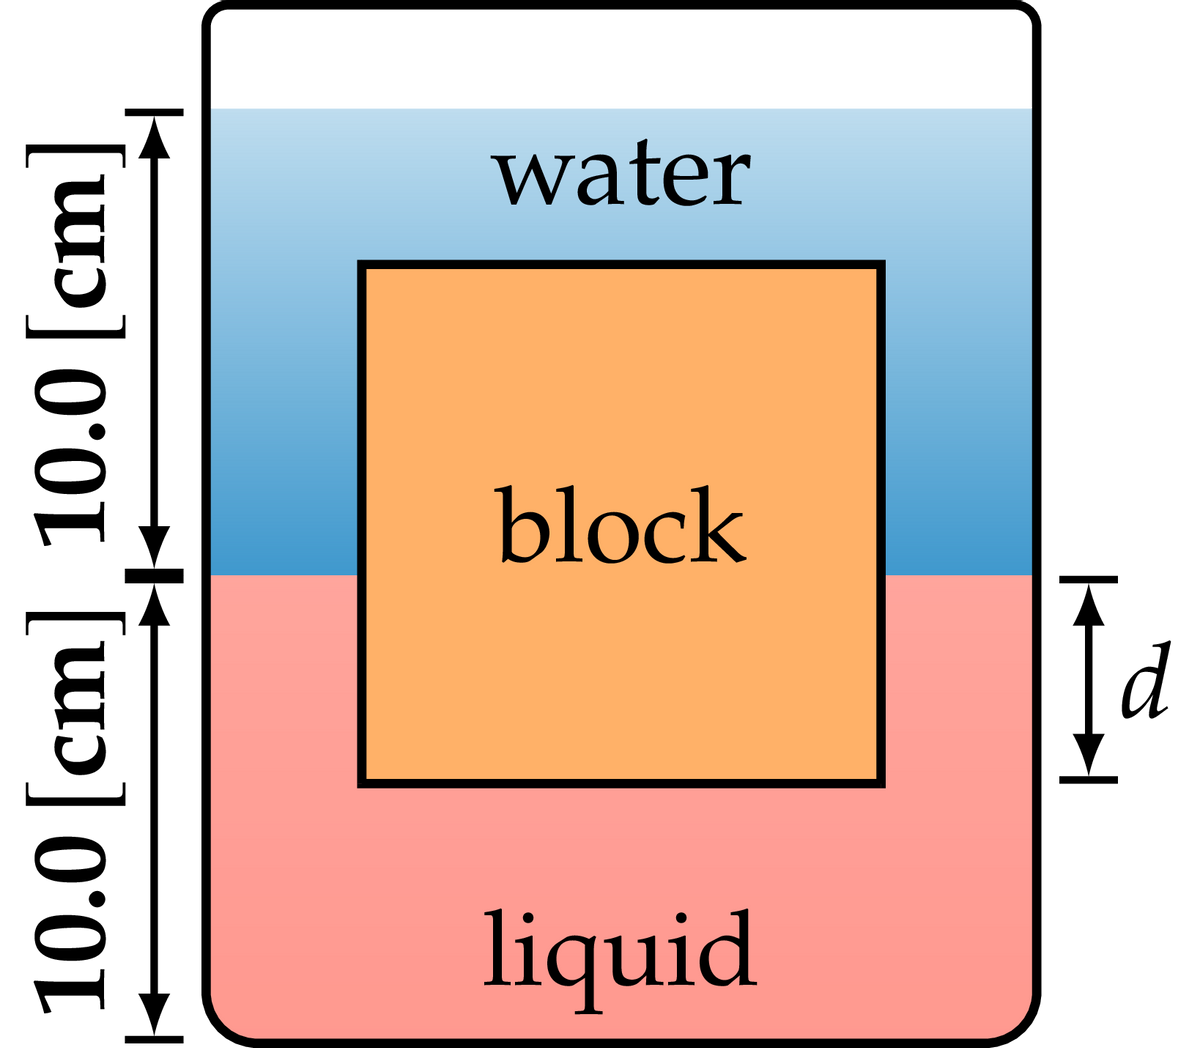 10.0 [cm] 10.0 [cm]
k
water
block
liquid
Ť
d